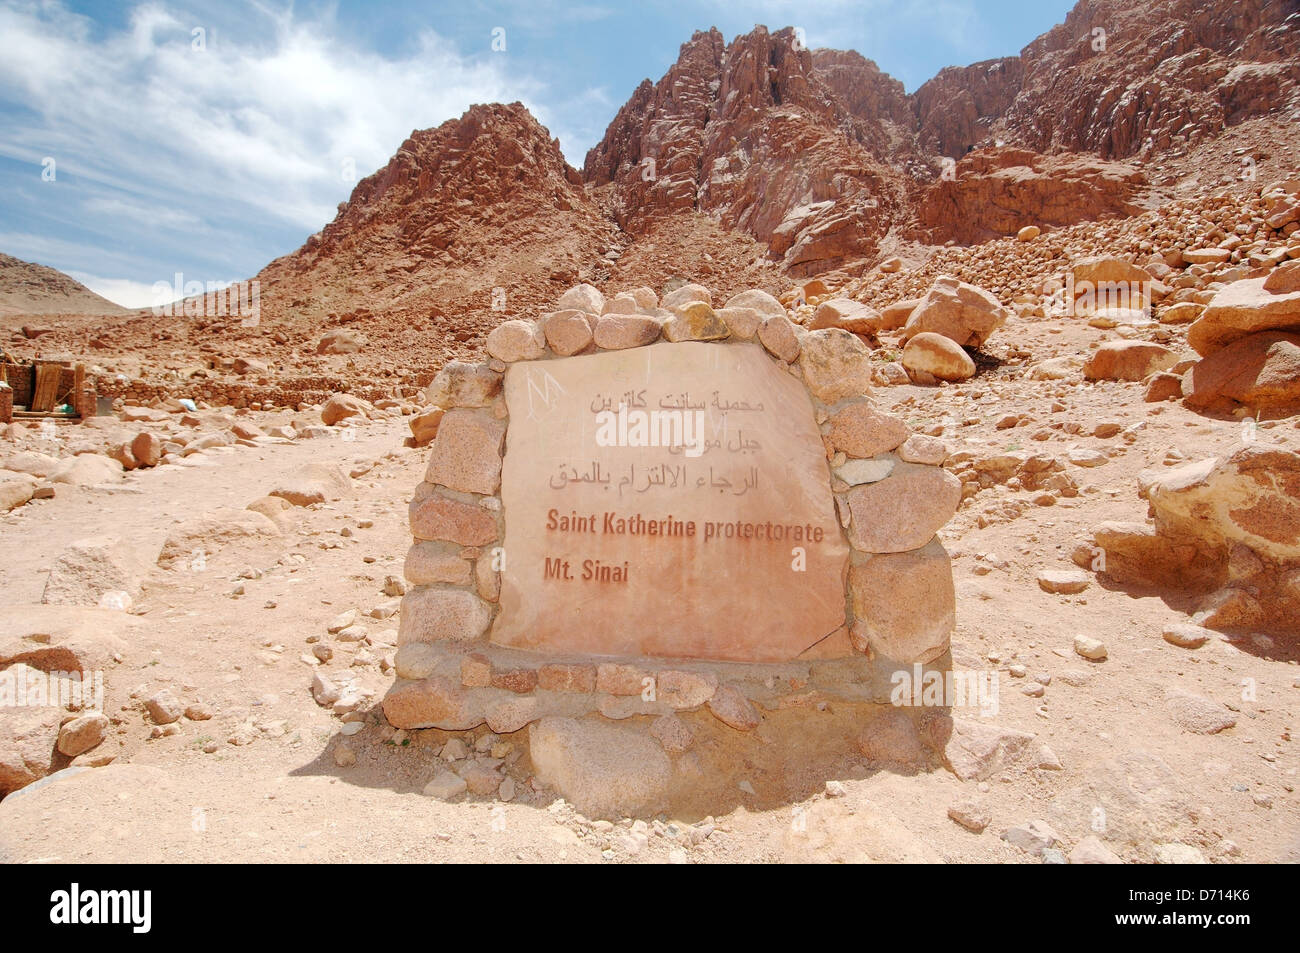 A stone plaque - Saint Katherine protectorate, Saint Catherine's Monastery (Saint Catherine Area), Sinai Peninsula, Egypt Stock Photo